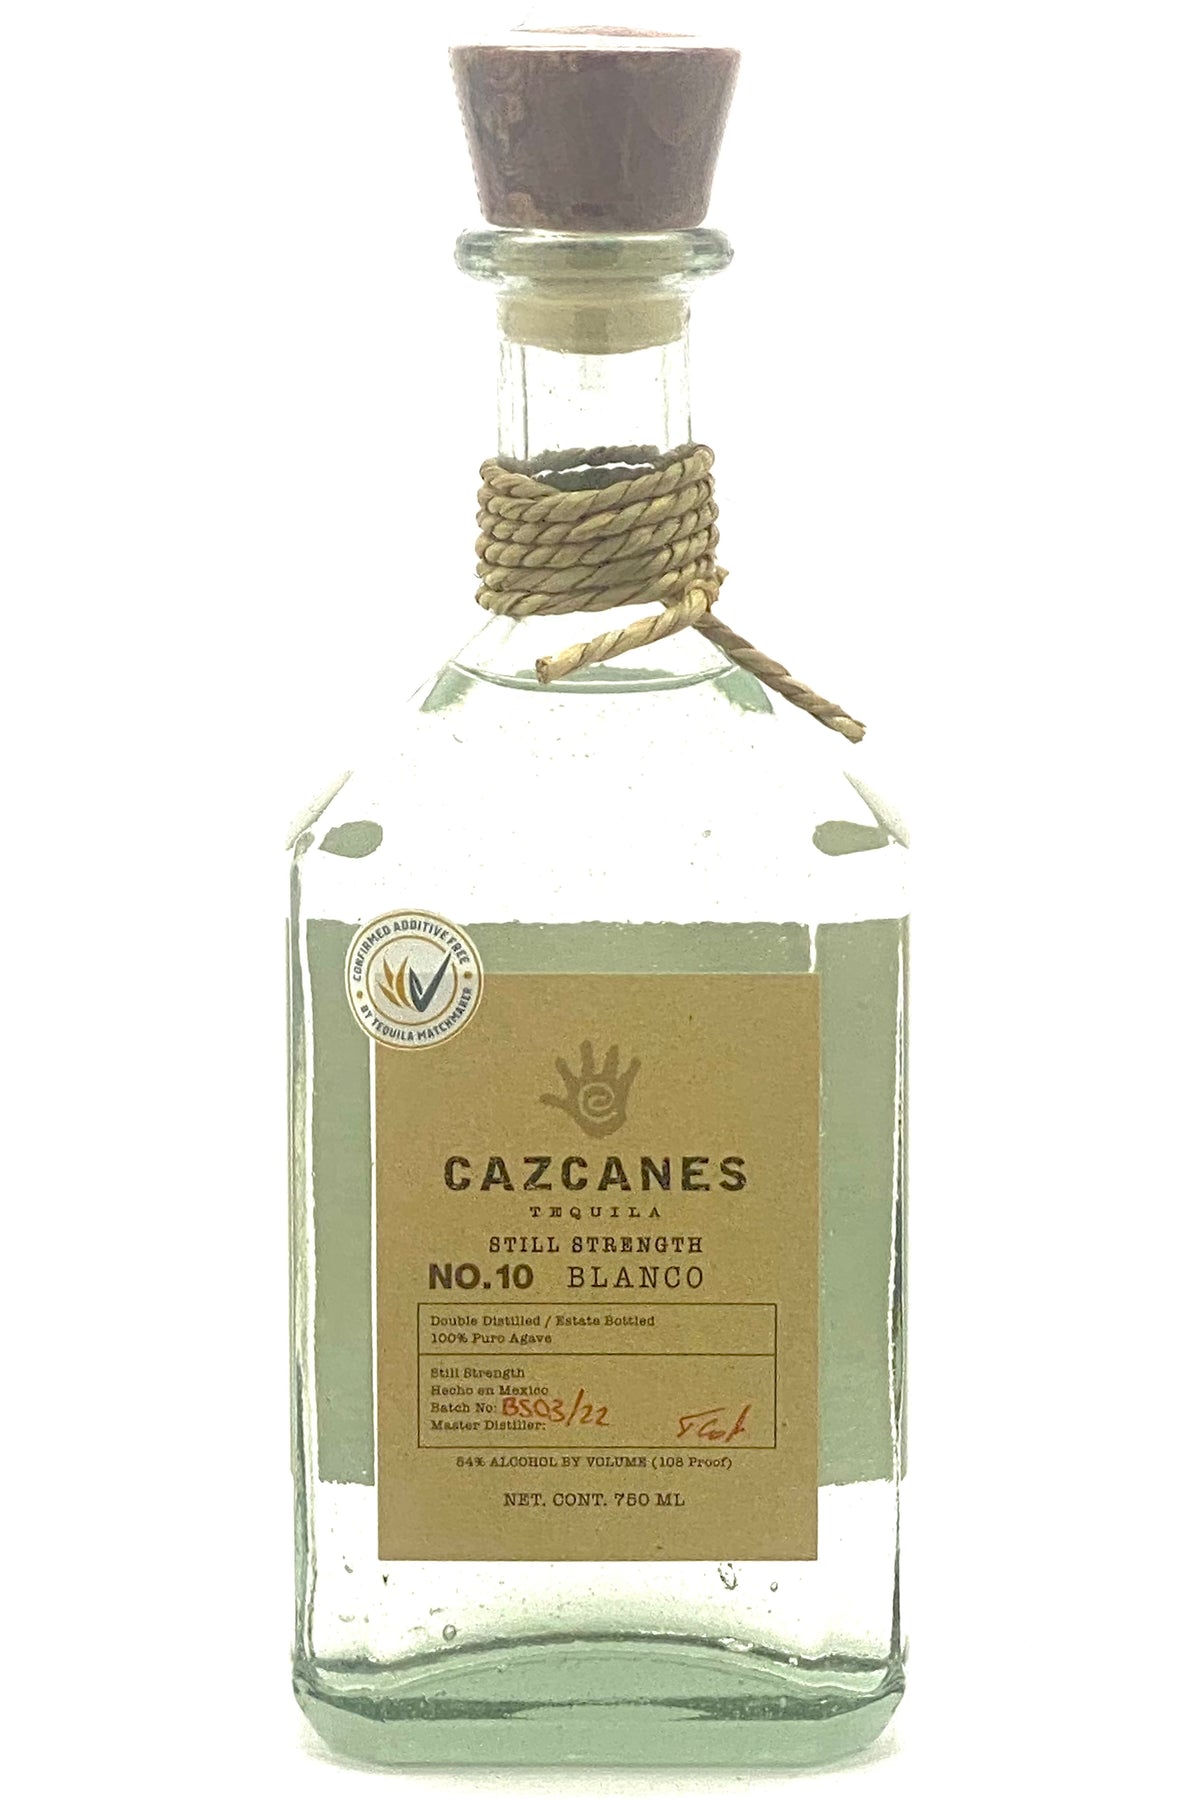 Cazcanes Tequila Still Strength Blanco No. 10